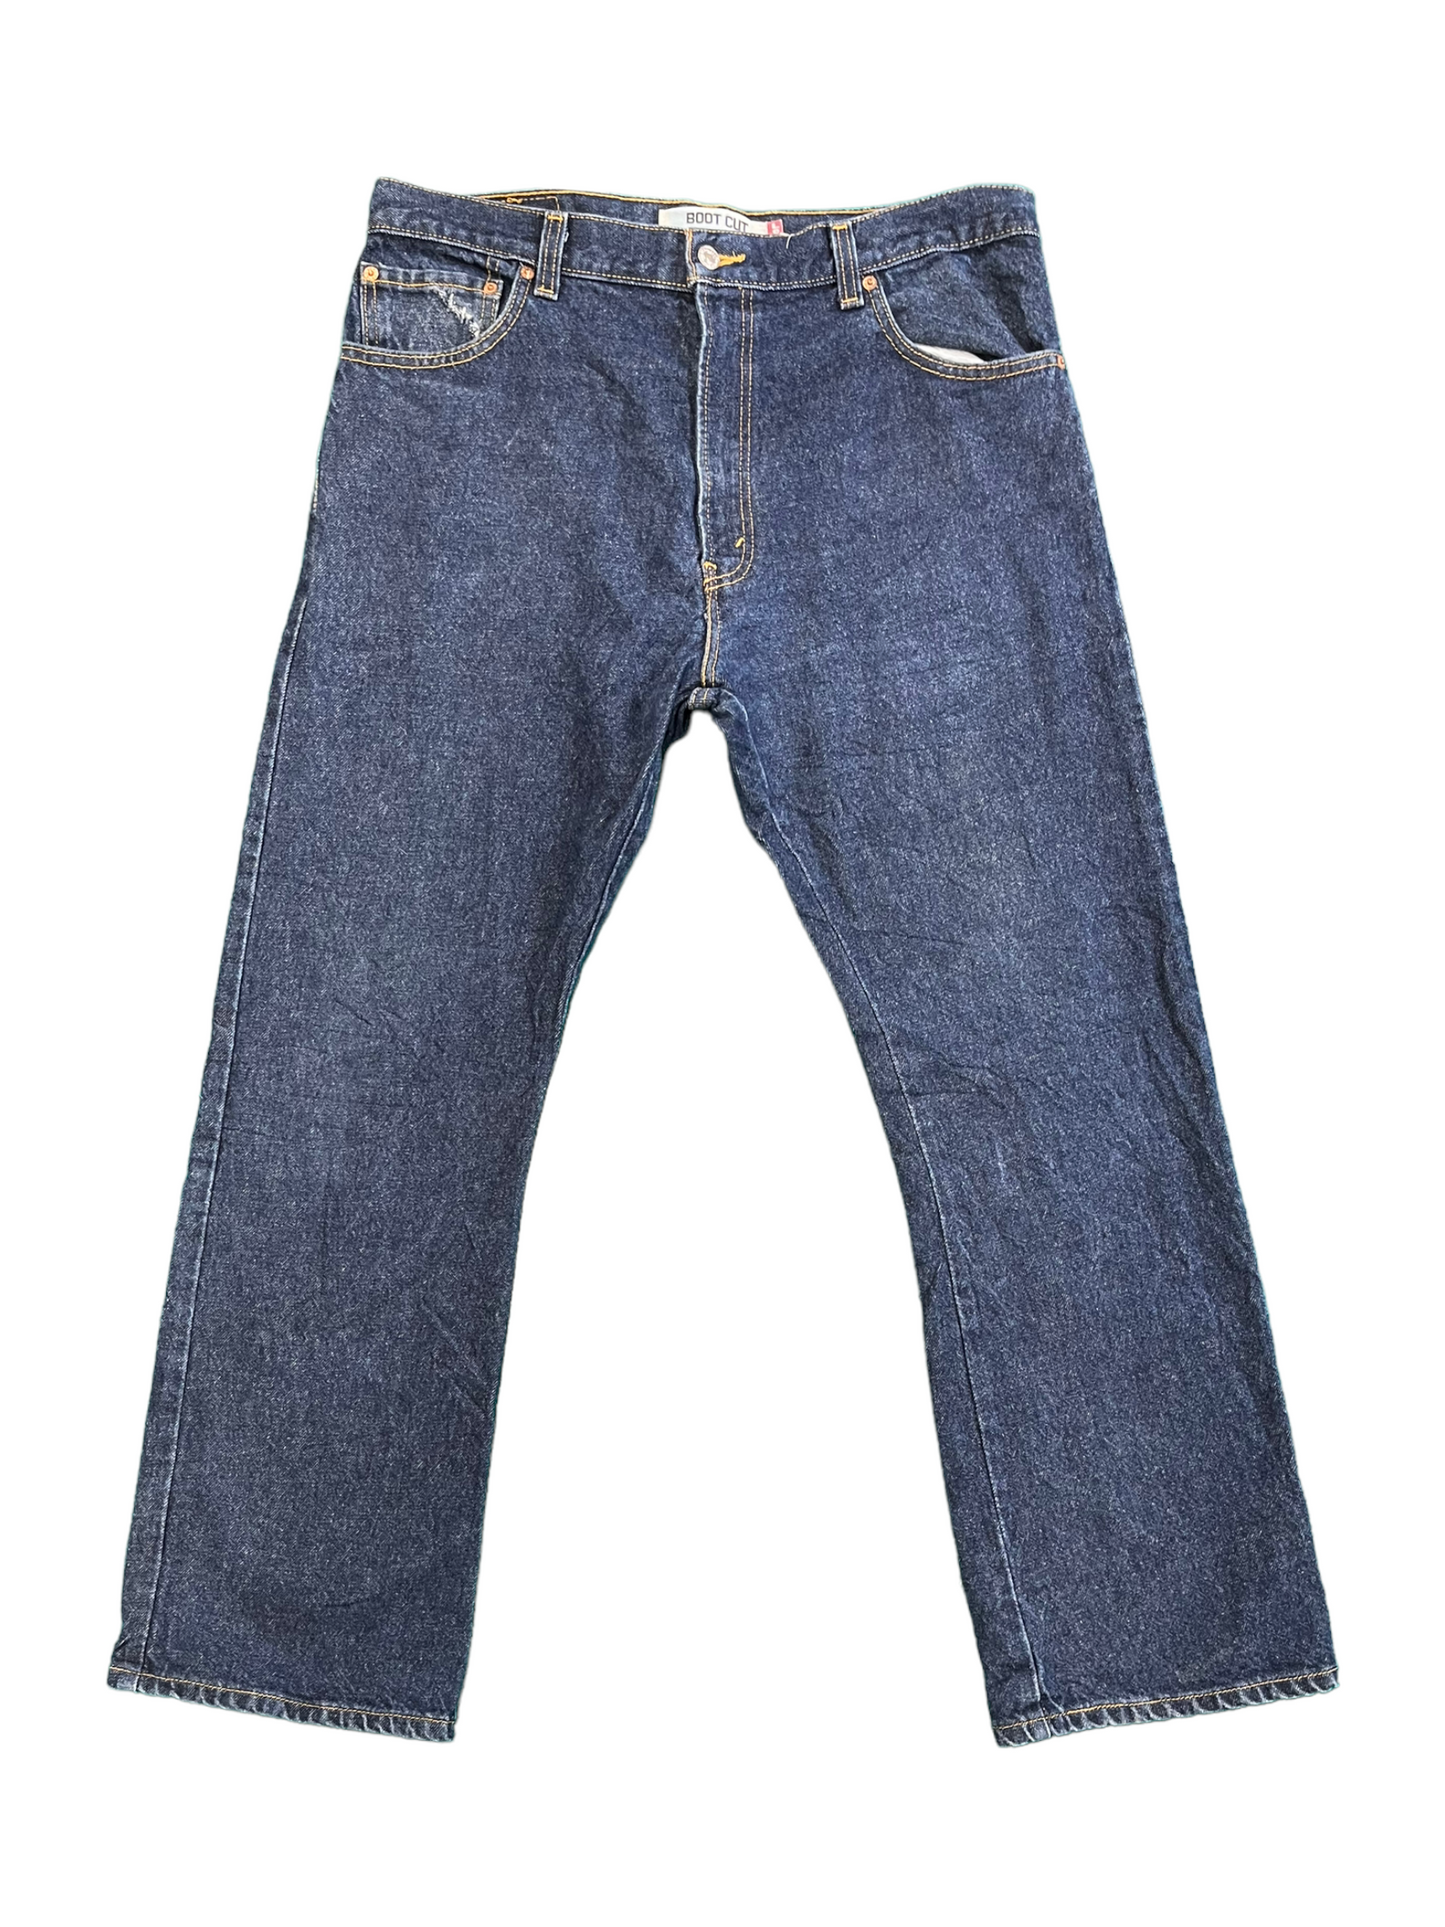 Mens Bootcut Levi Jeans - Waist 36" Length 30"